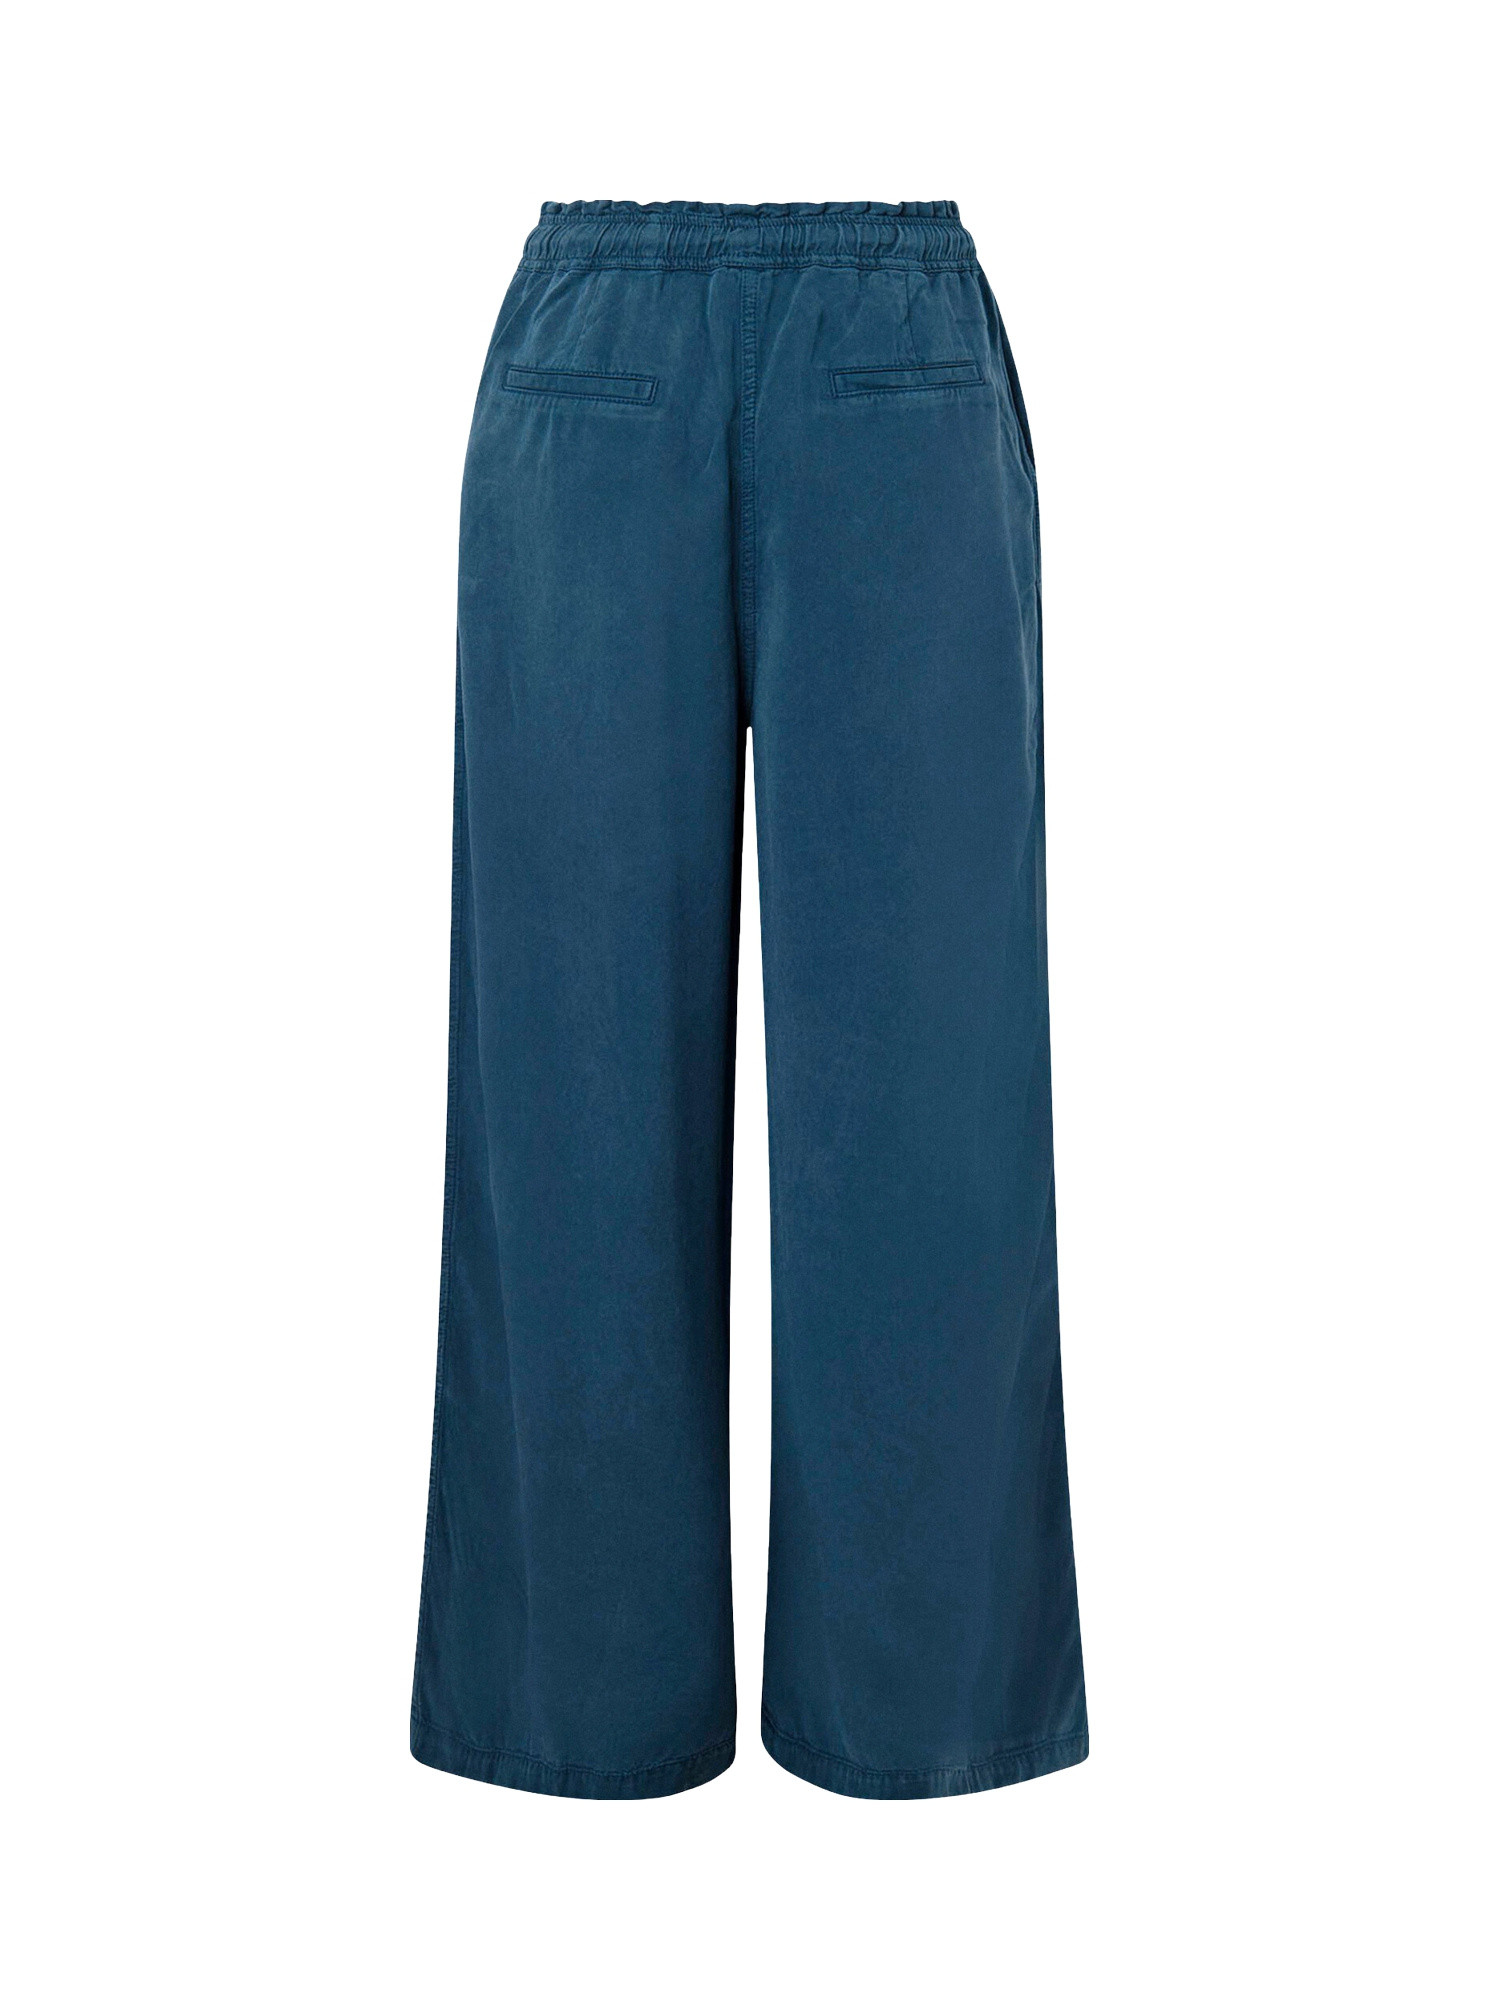 Pepe Jeans - Pantaloni a vita alta, Blu scuro, large image number 1